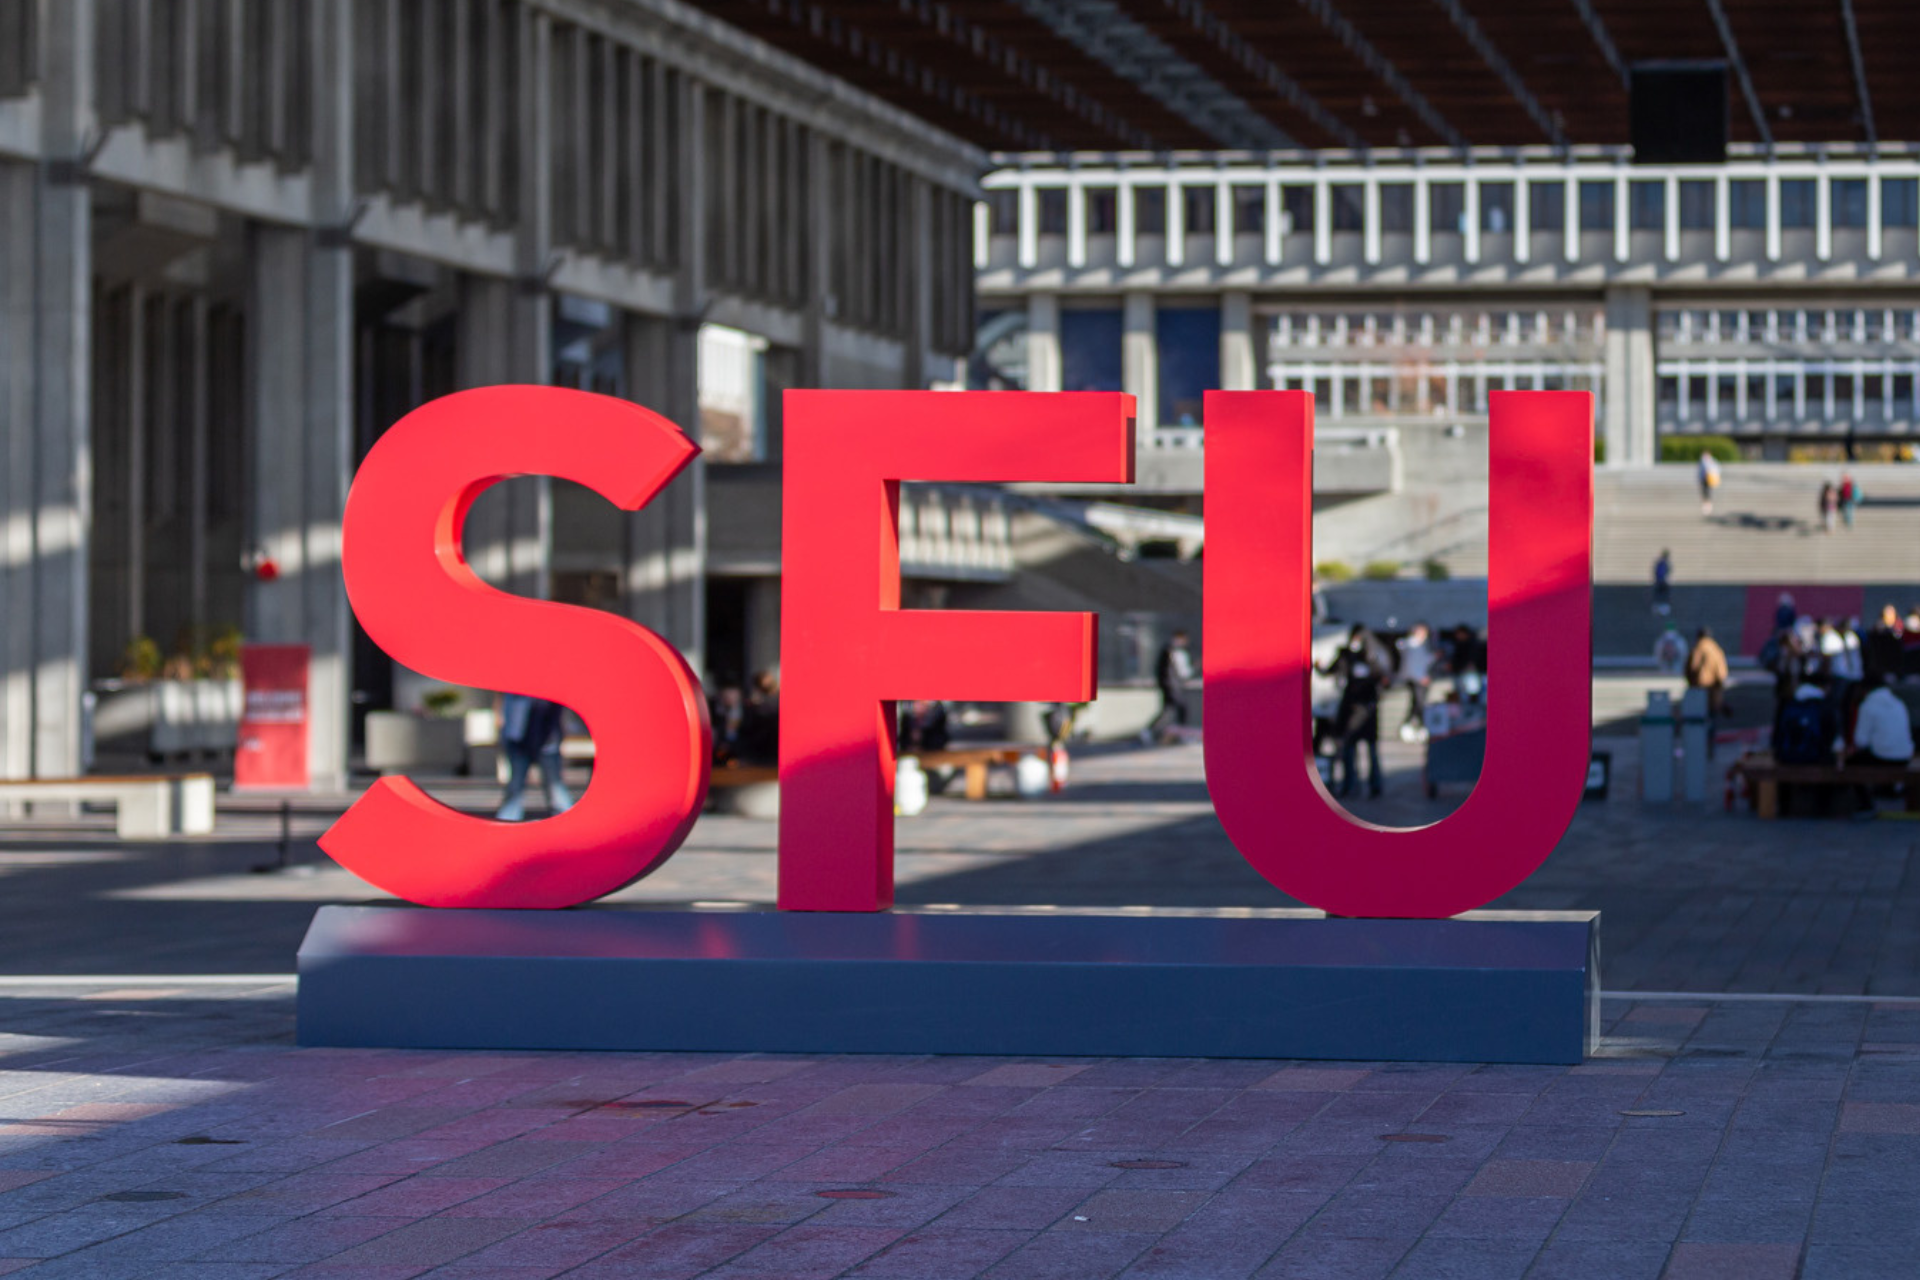 SFU represented on BCBUSINESS’ 30 under 30 list